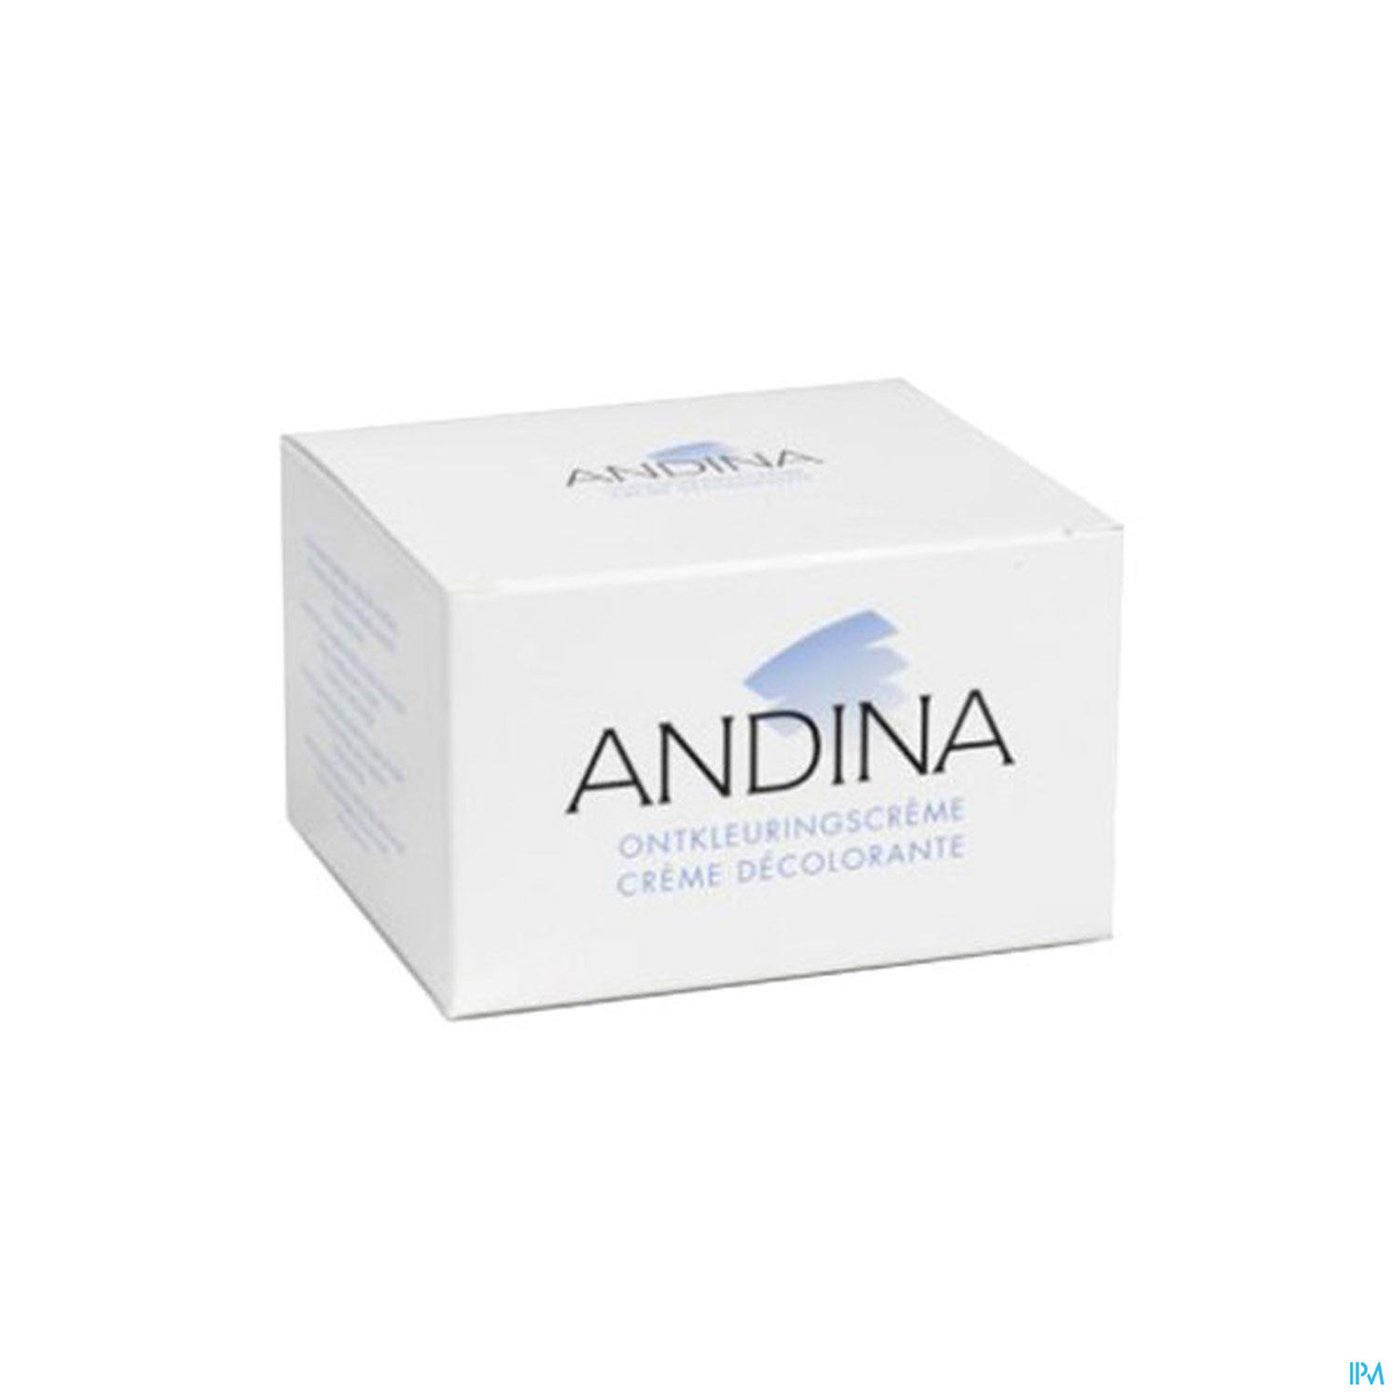 Andina ontkleuringscrème  100ml  packshot